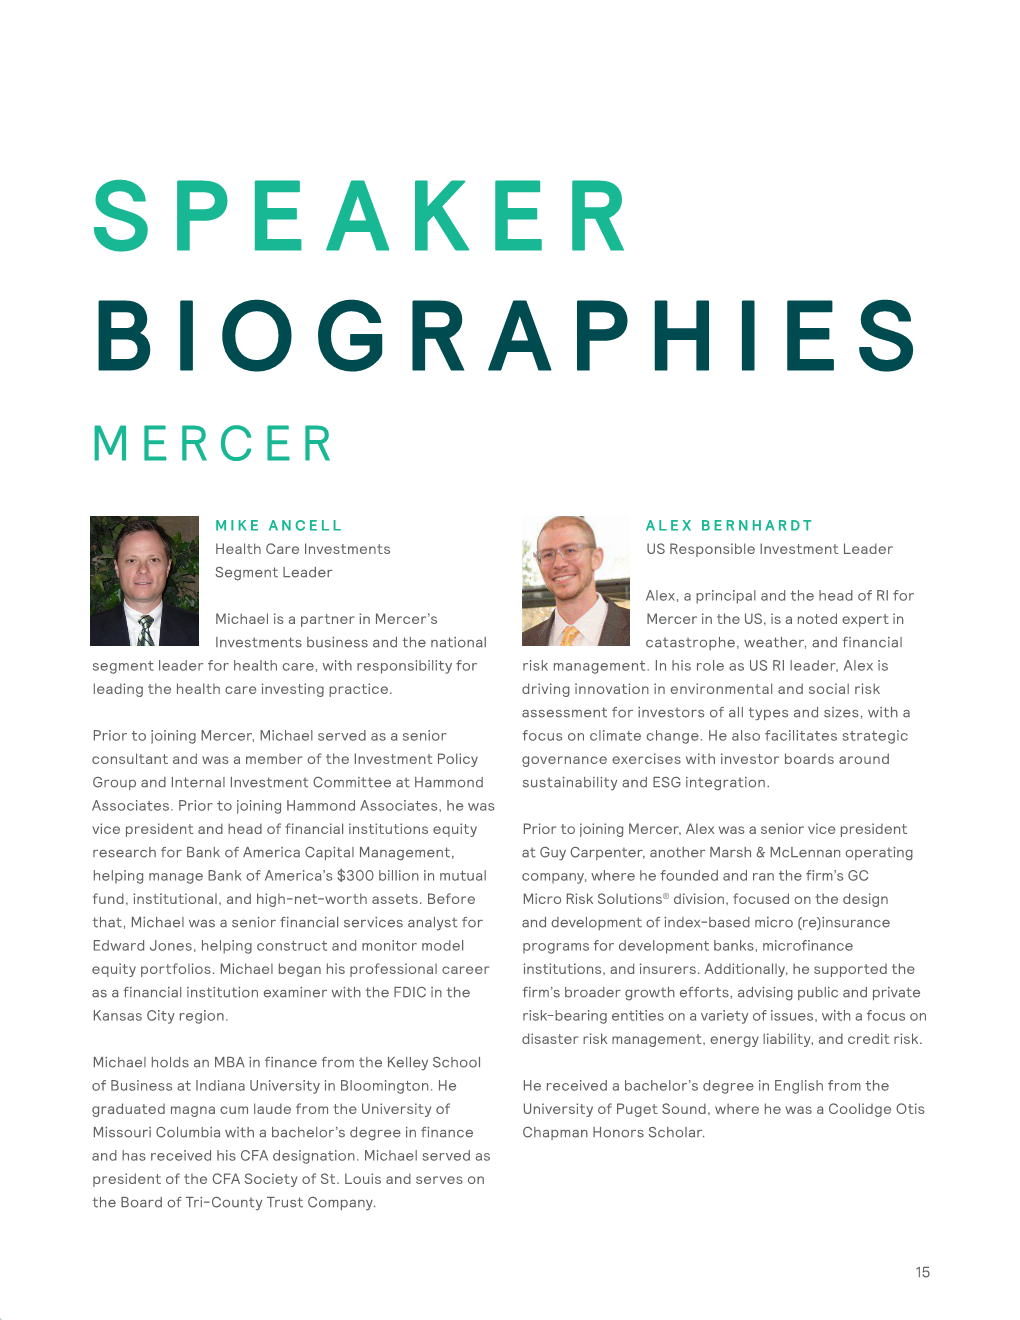 Speaker Biographies